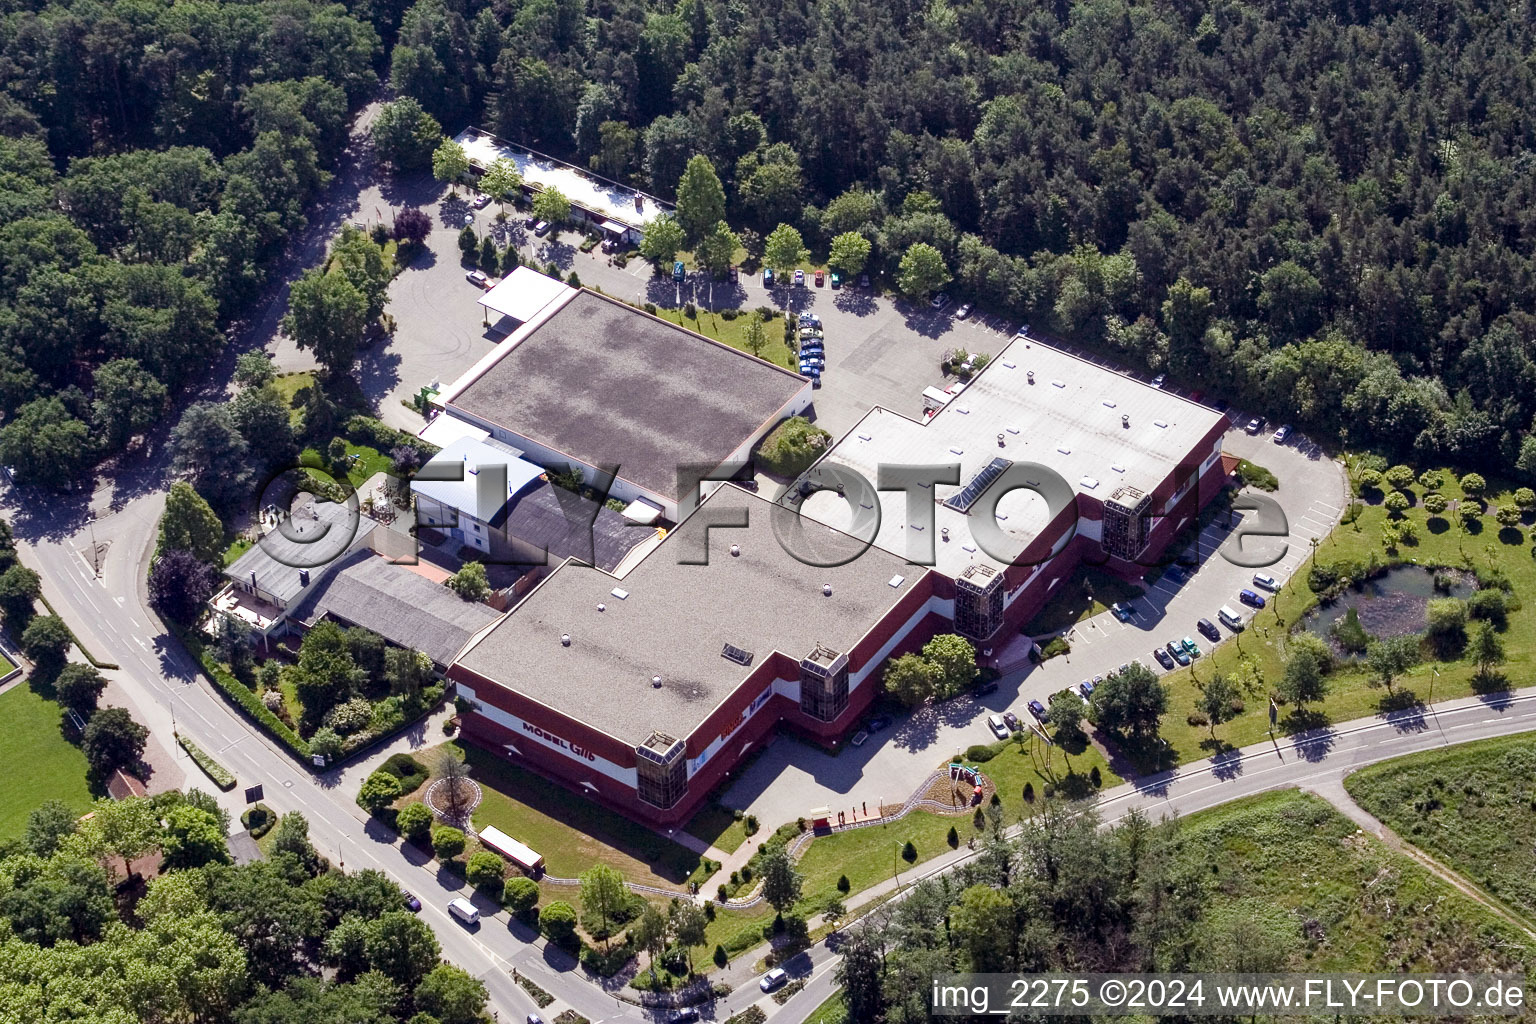 Aerial photograpy of Furniture GILB in the district Herxheim in Herxheim bei Landau/Pfalz in the state Rhineland-Palatinate, Germany